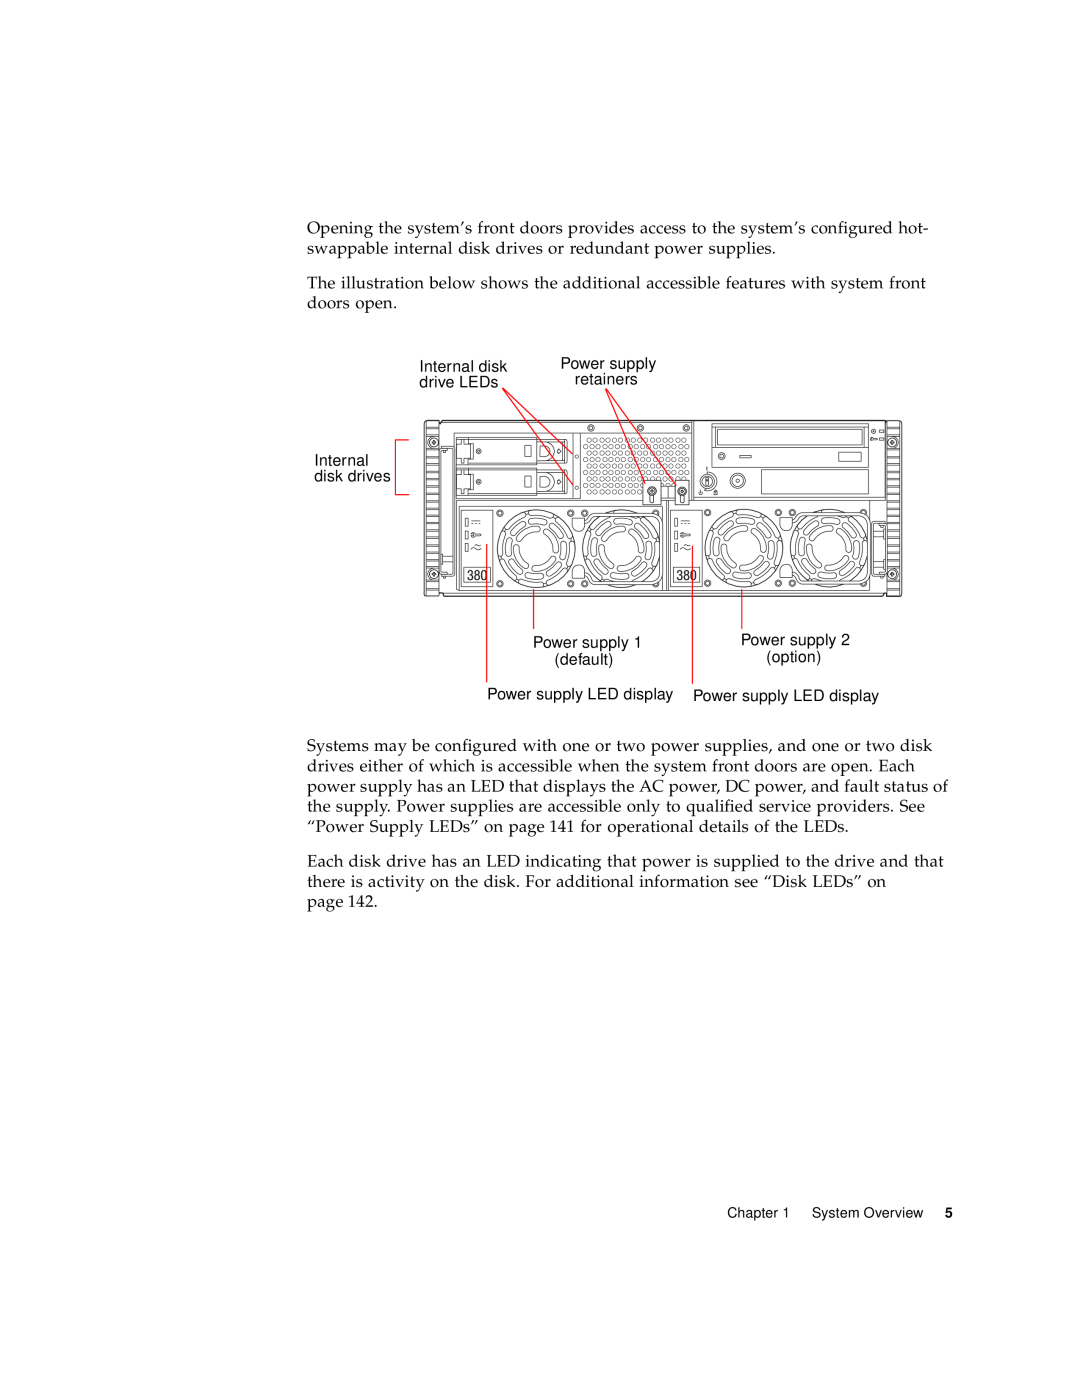 Sun Microsystems 220R manual page 